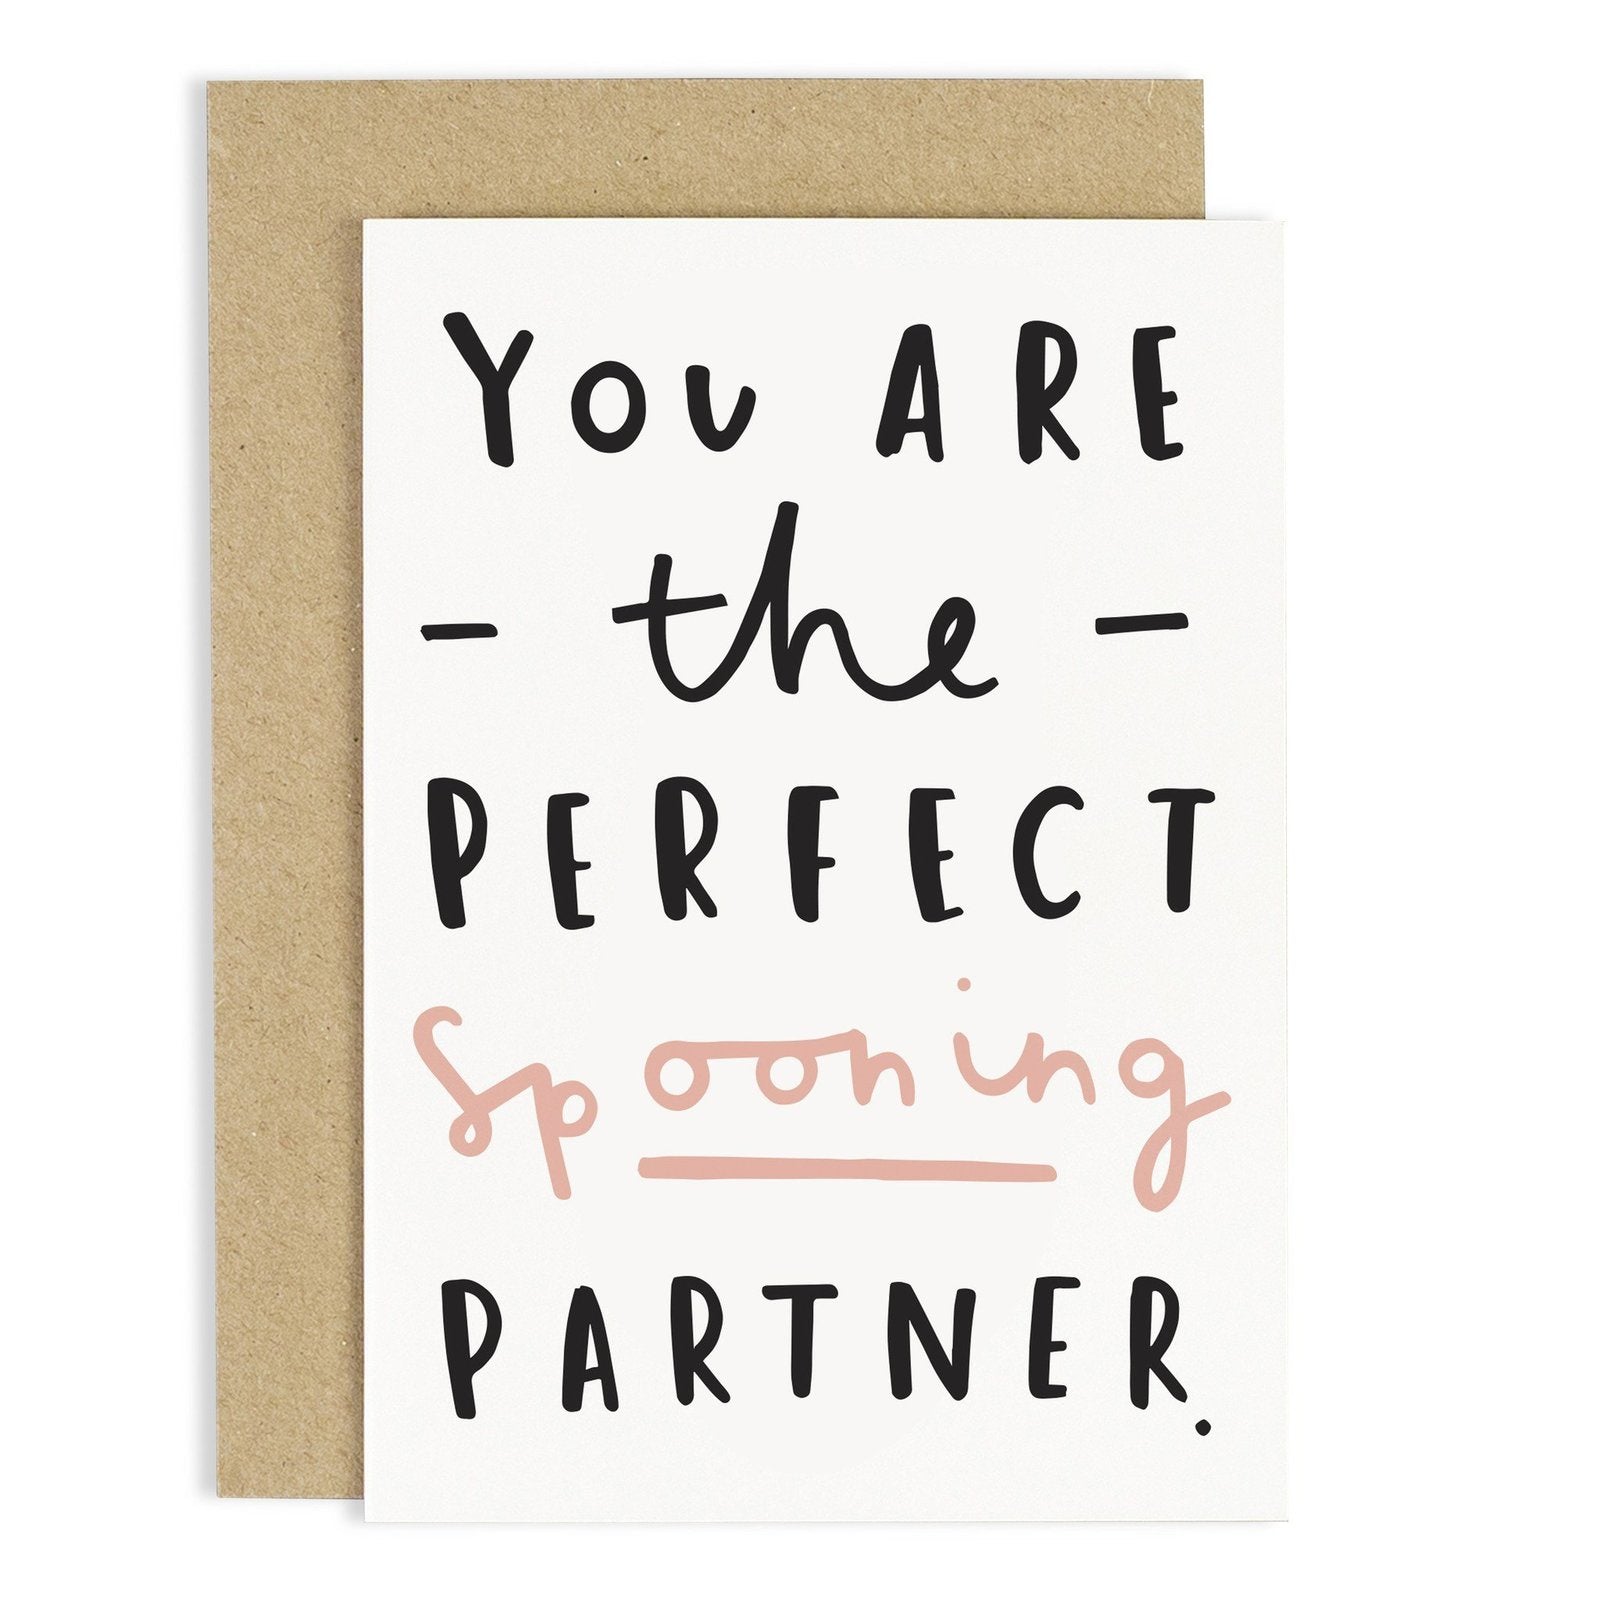 Spooning Partner Greeting Card